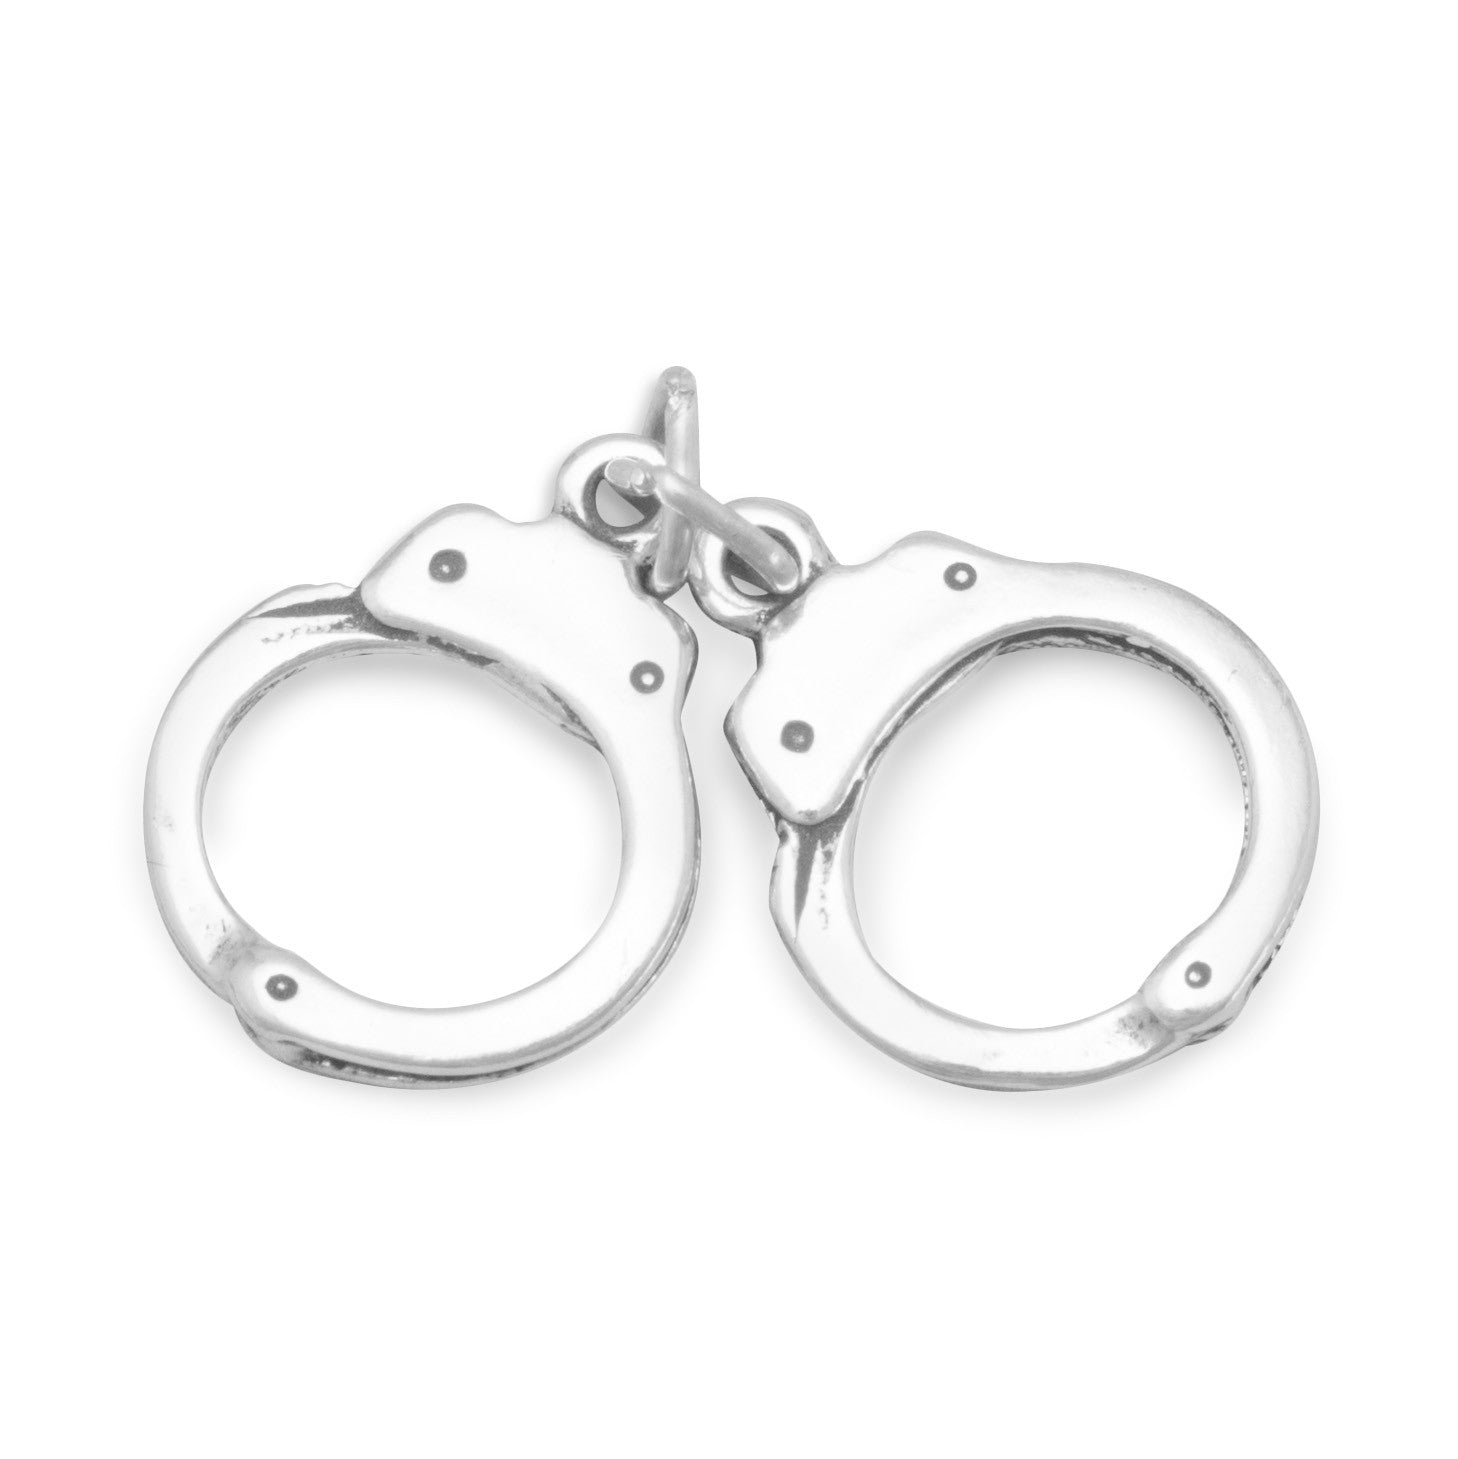 Pair of Handcuffs Charm